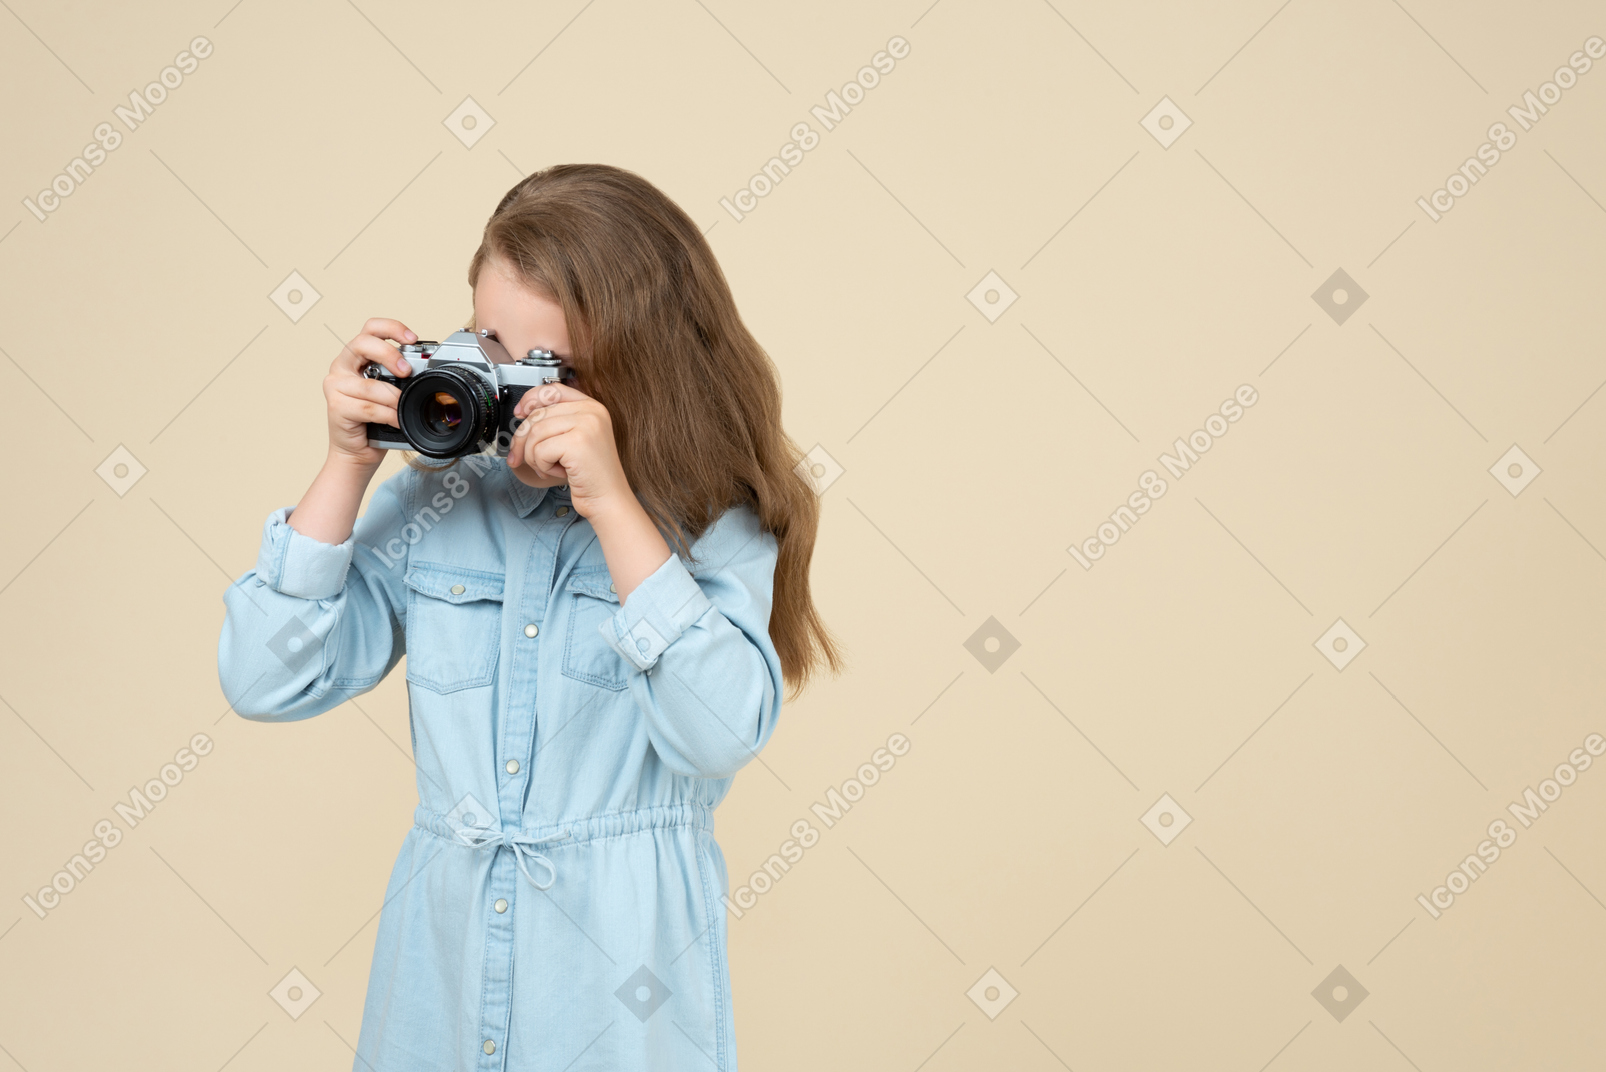 Cute little girl holding a camera